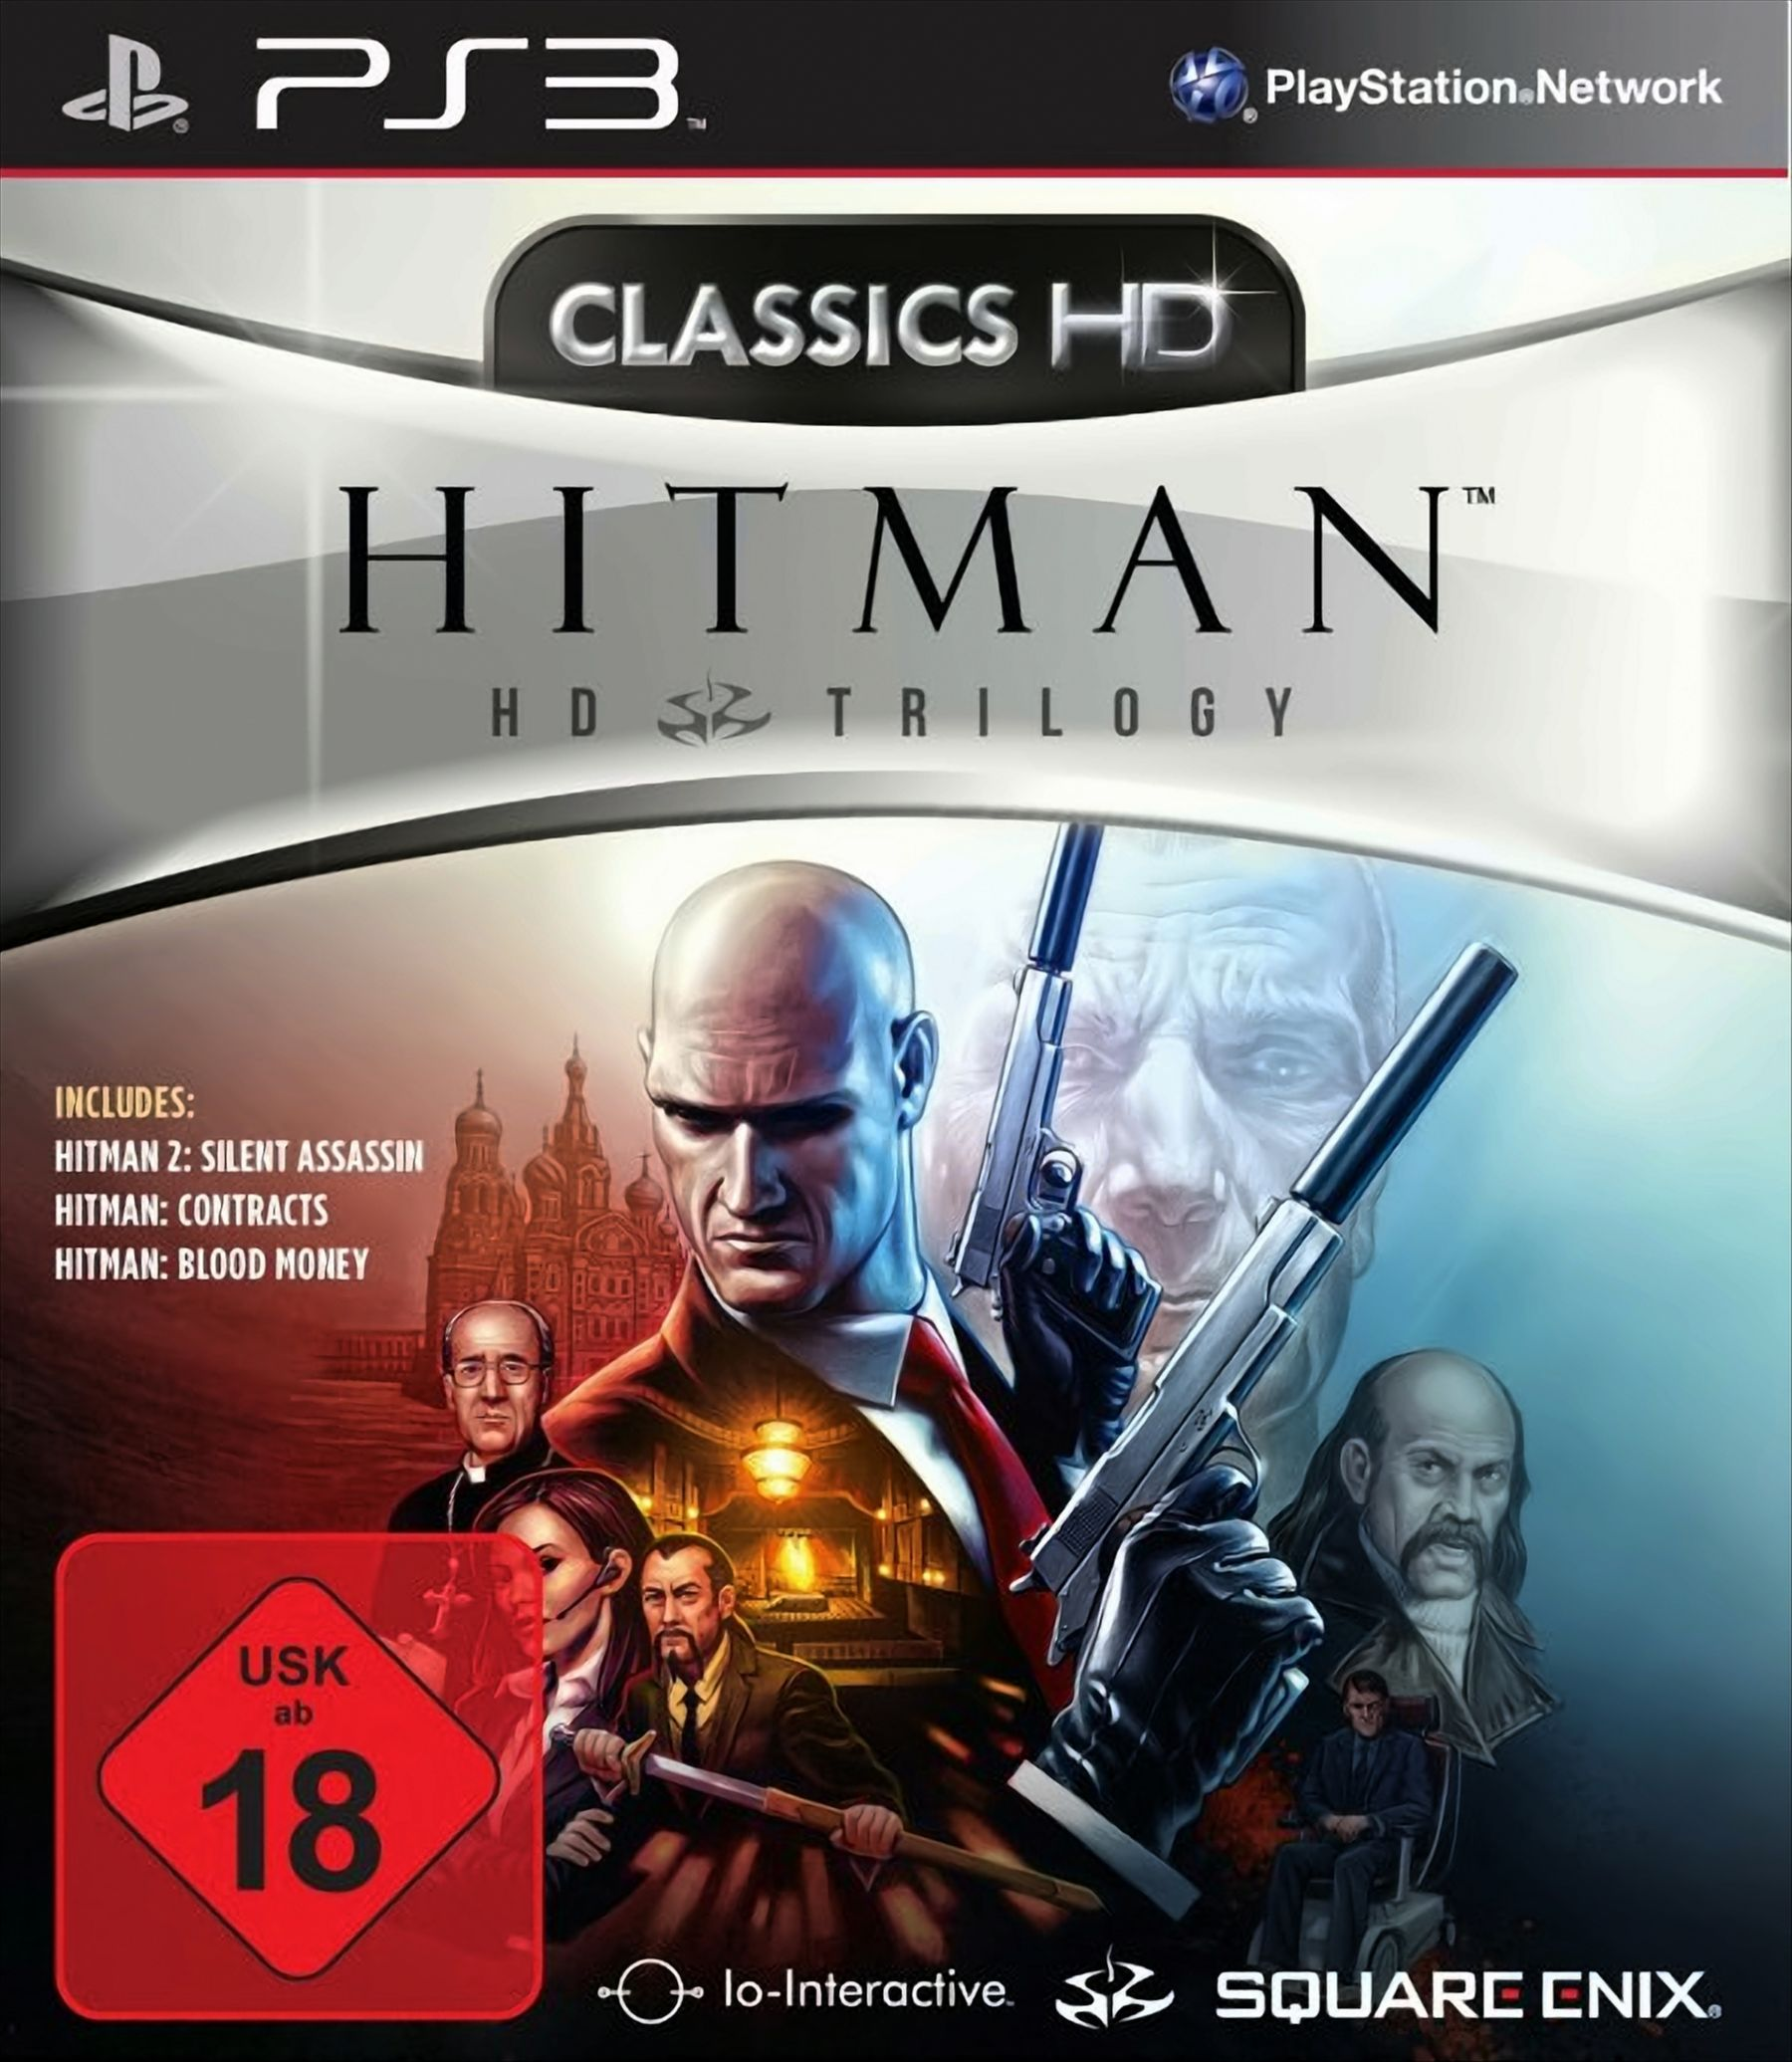 - HD 3] [PlayStation Trilogy Hitman